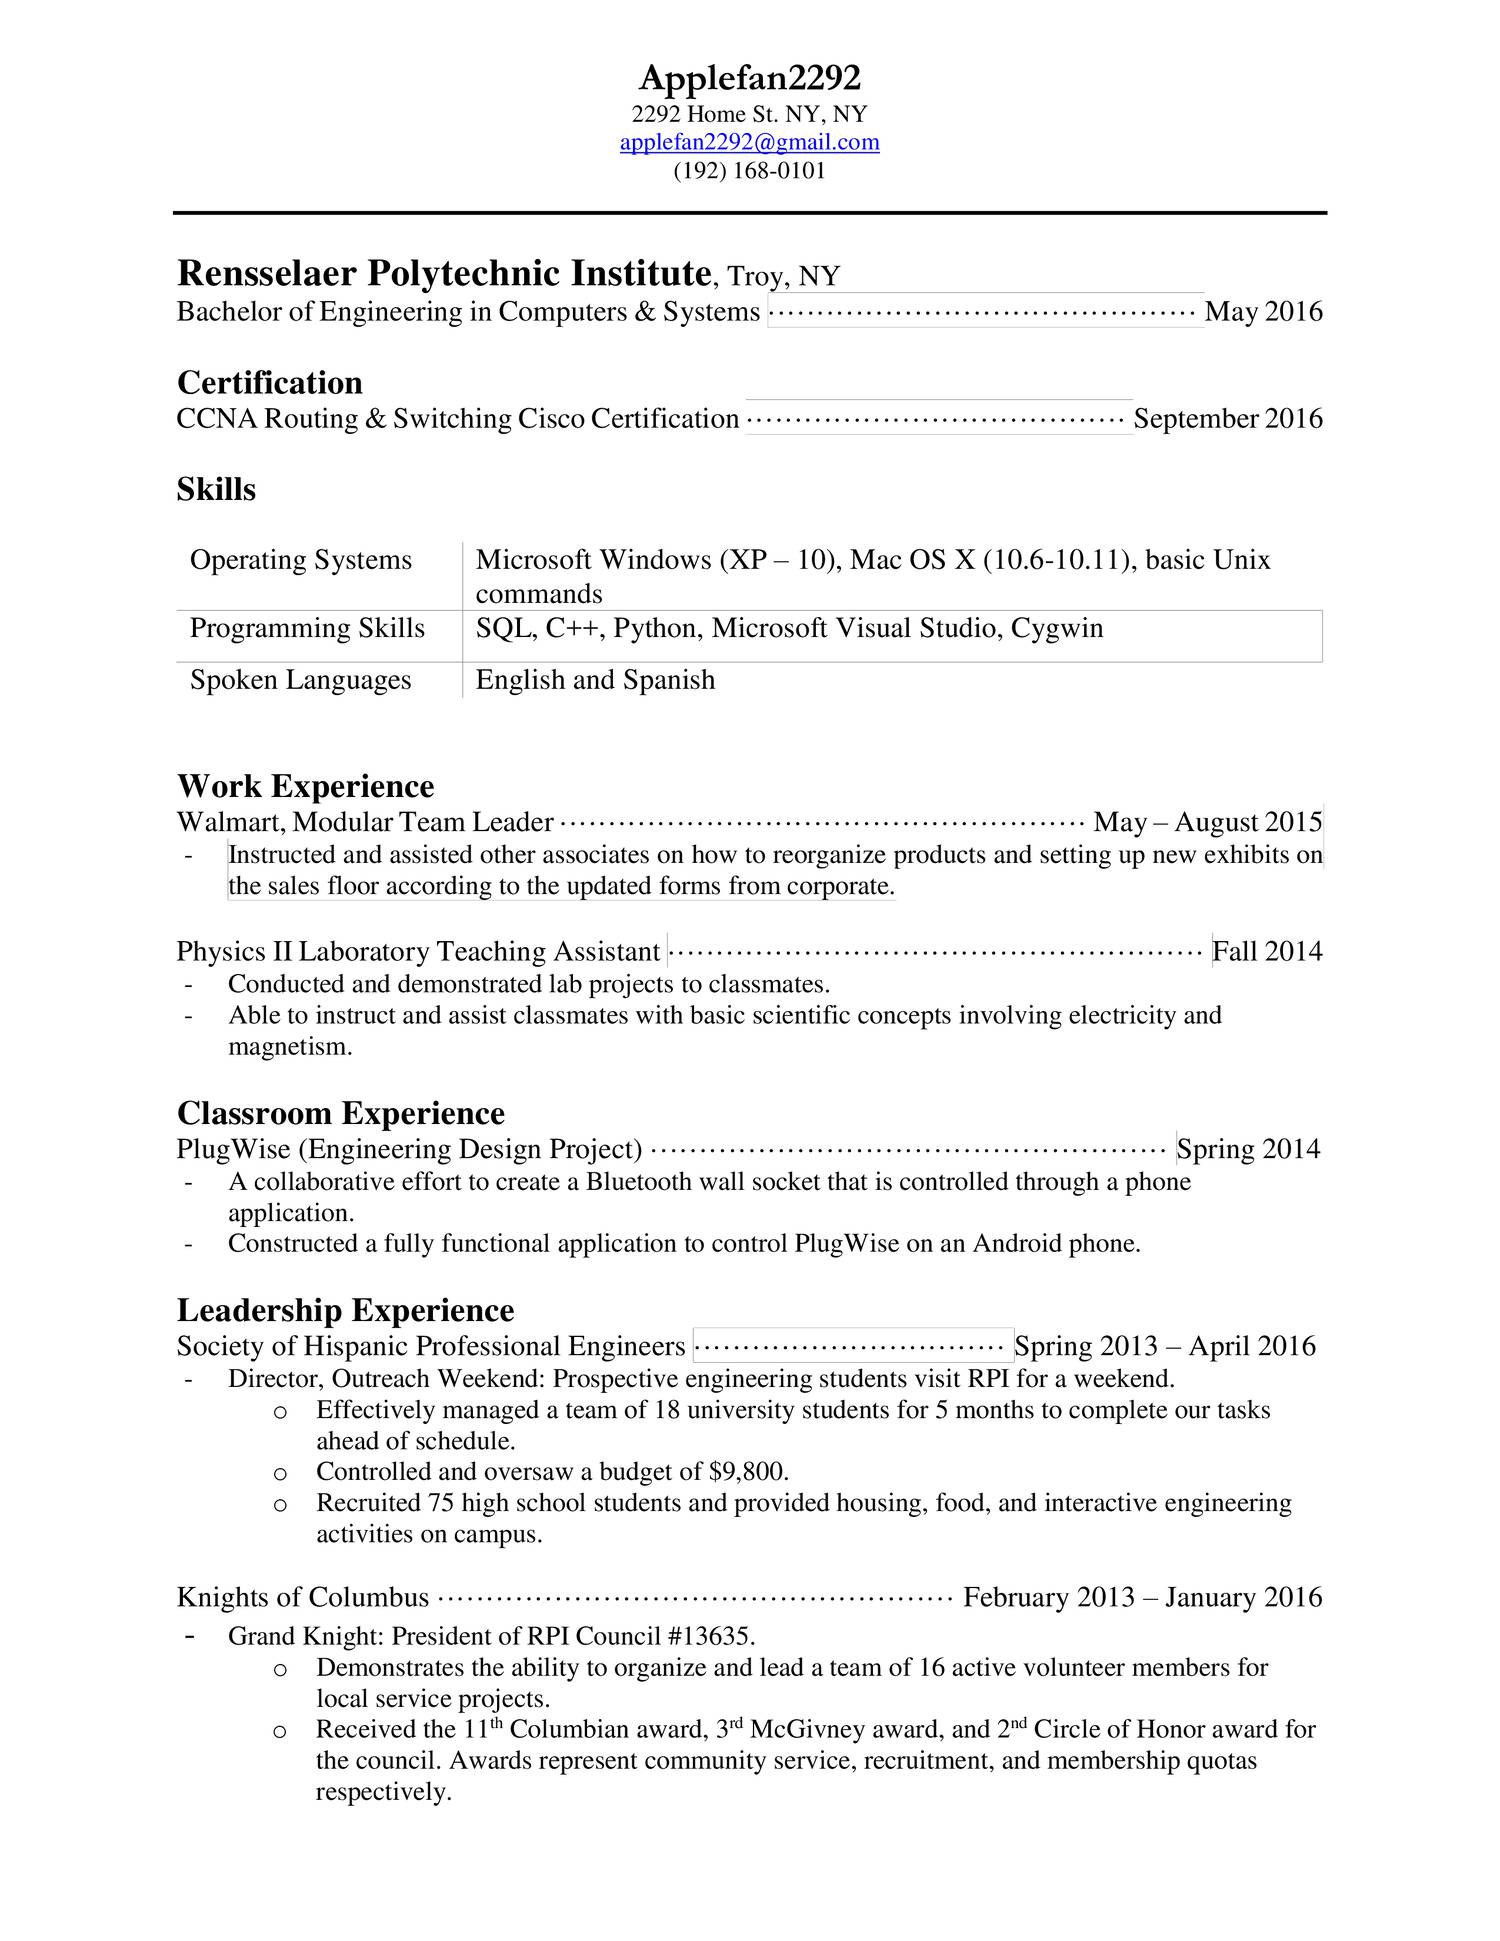 reddit resume template